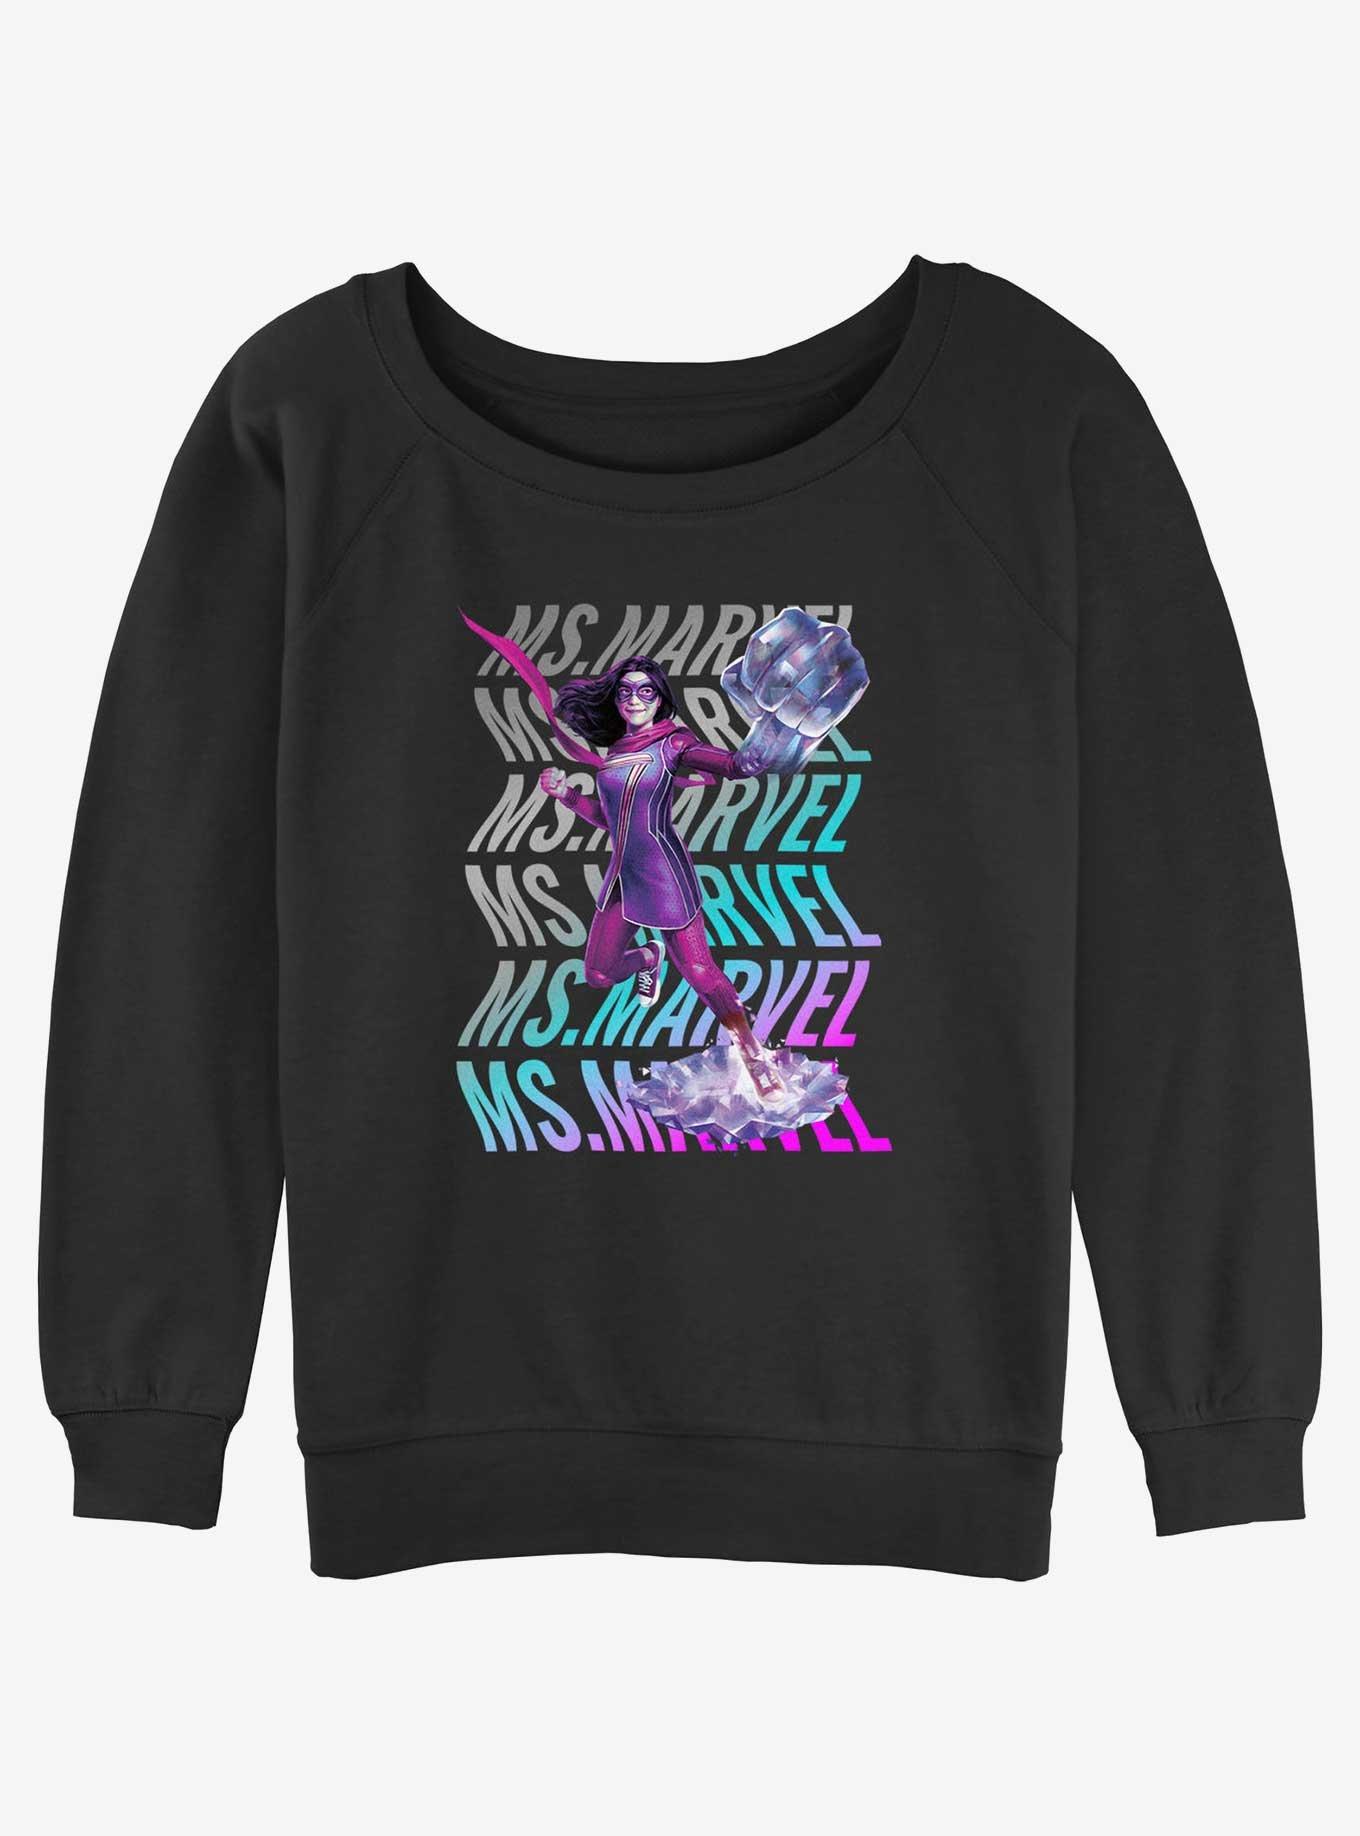 Marvel Ms. Wave Girls Slouchy Sweatshirt